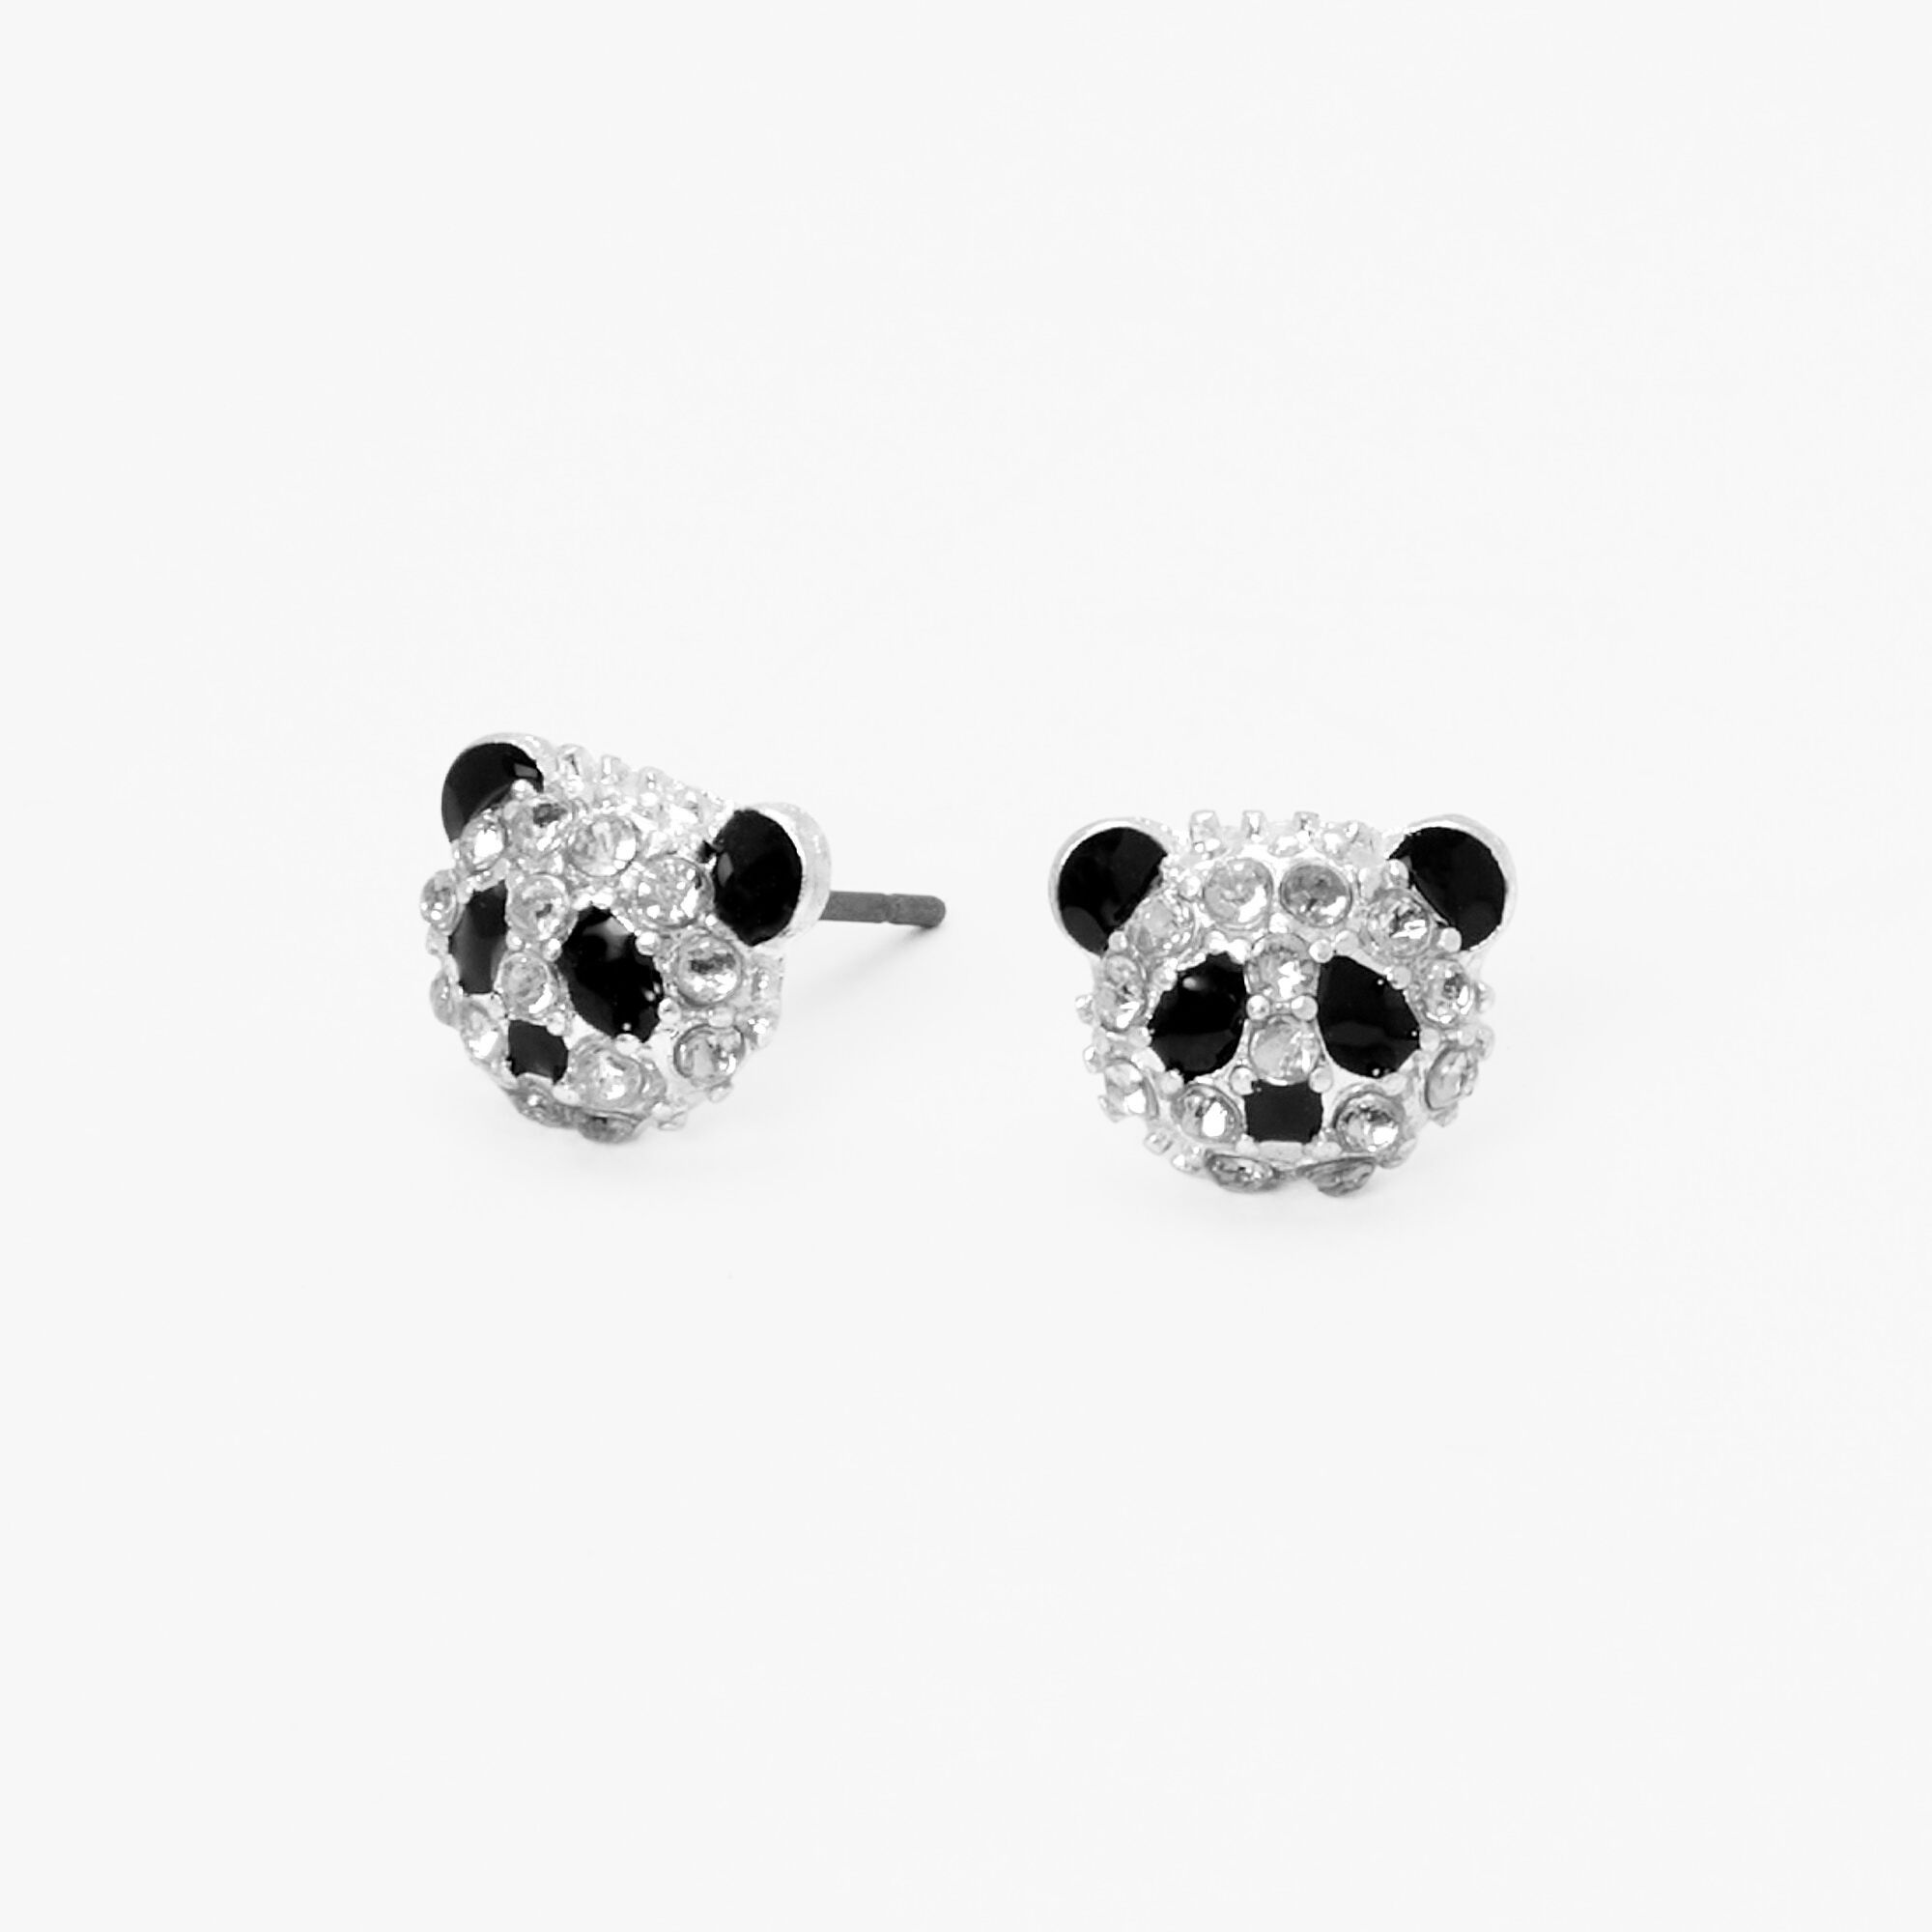 View Claires Panda Crystal Stud Earrings information